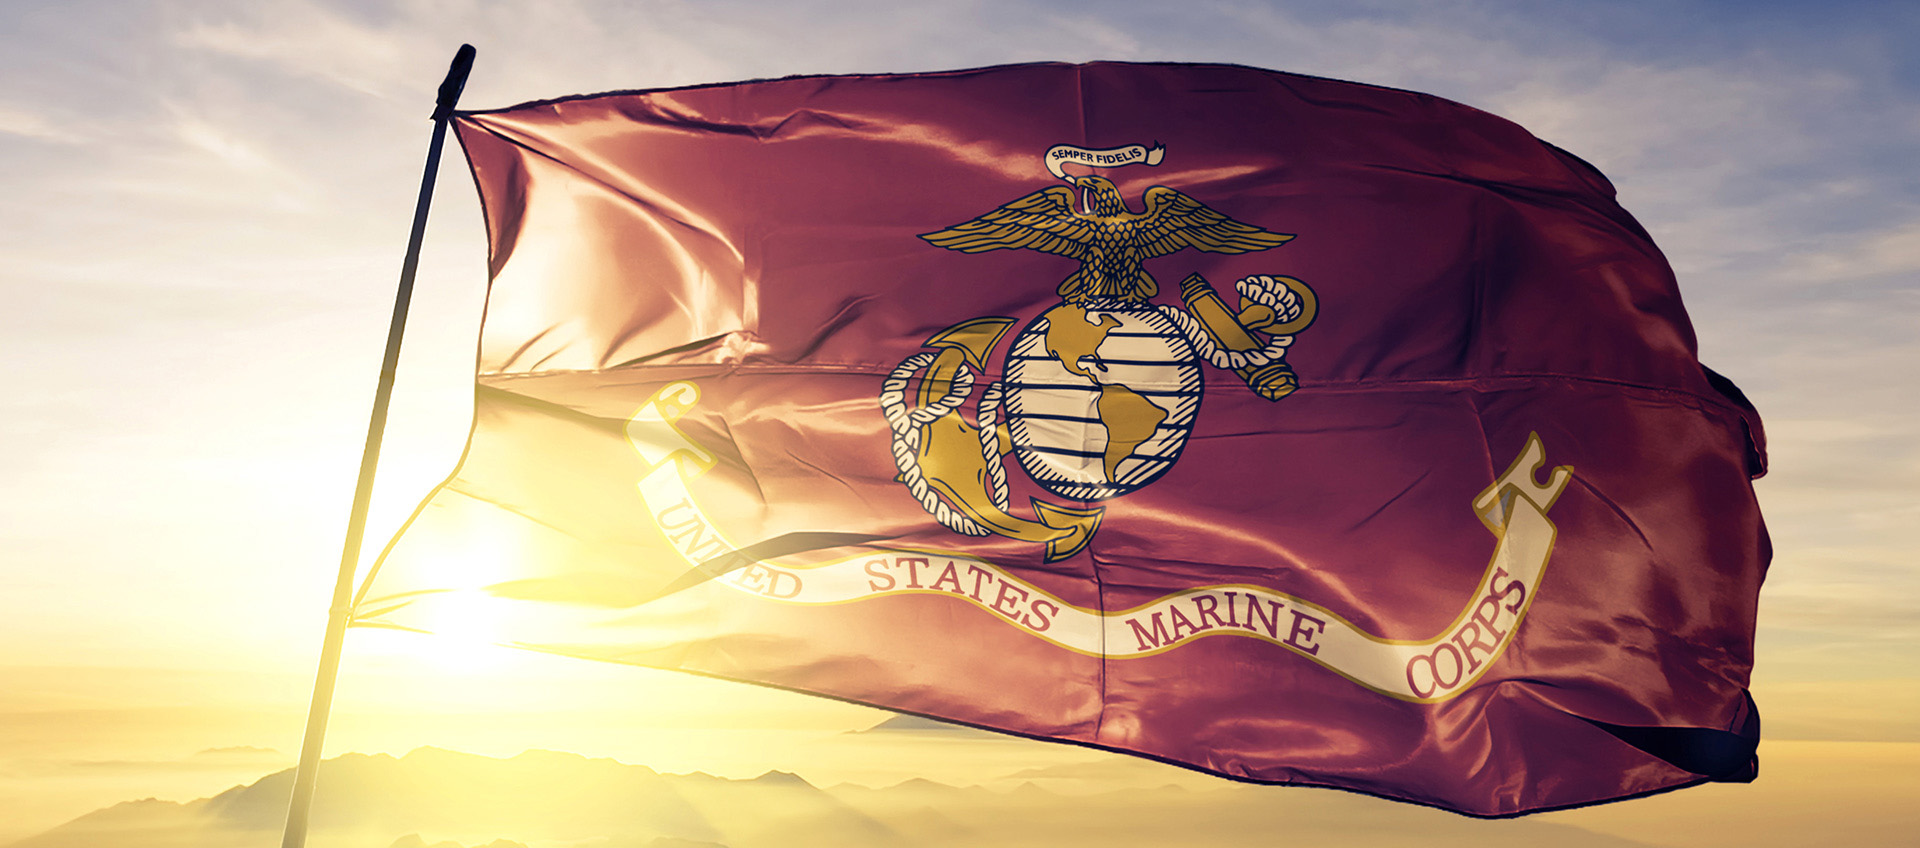 United States Marine Corps flag textile cloth fabric waving on the top sunrise mist fog